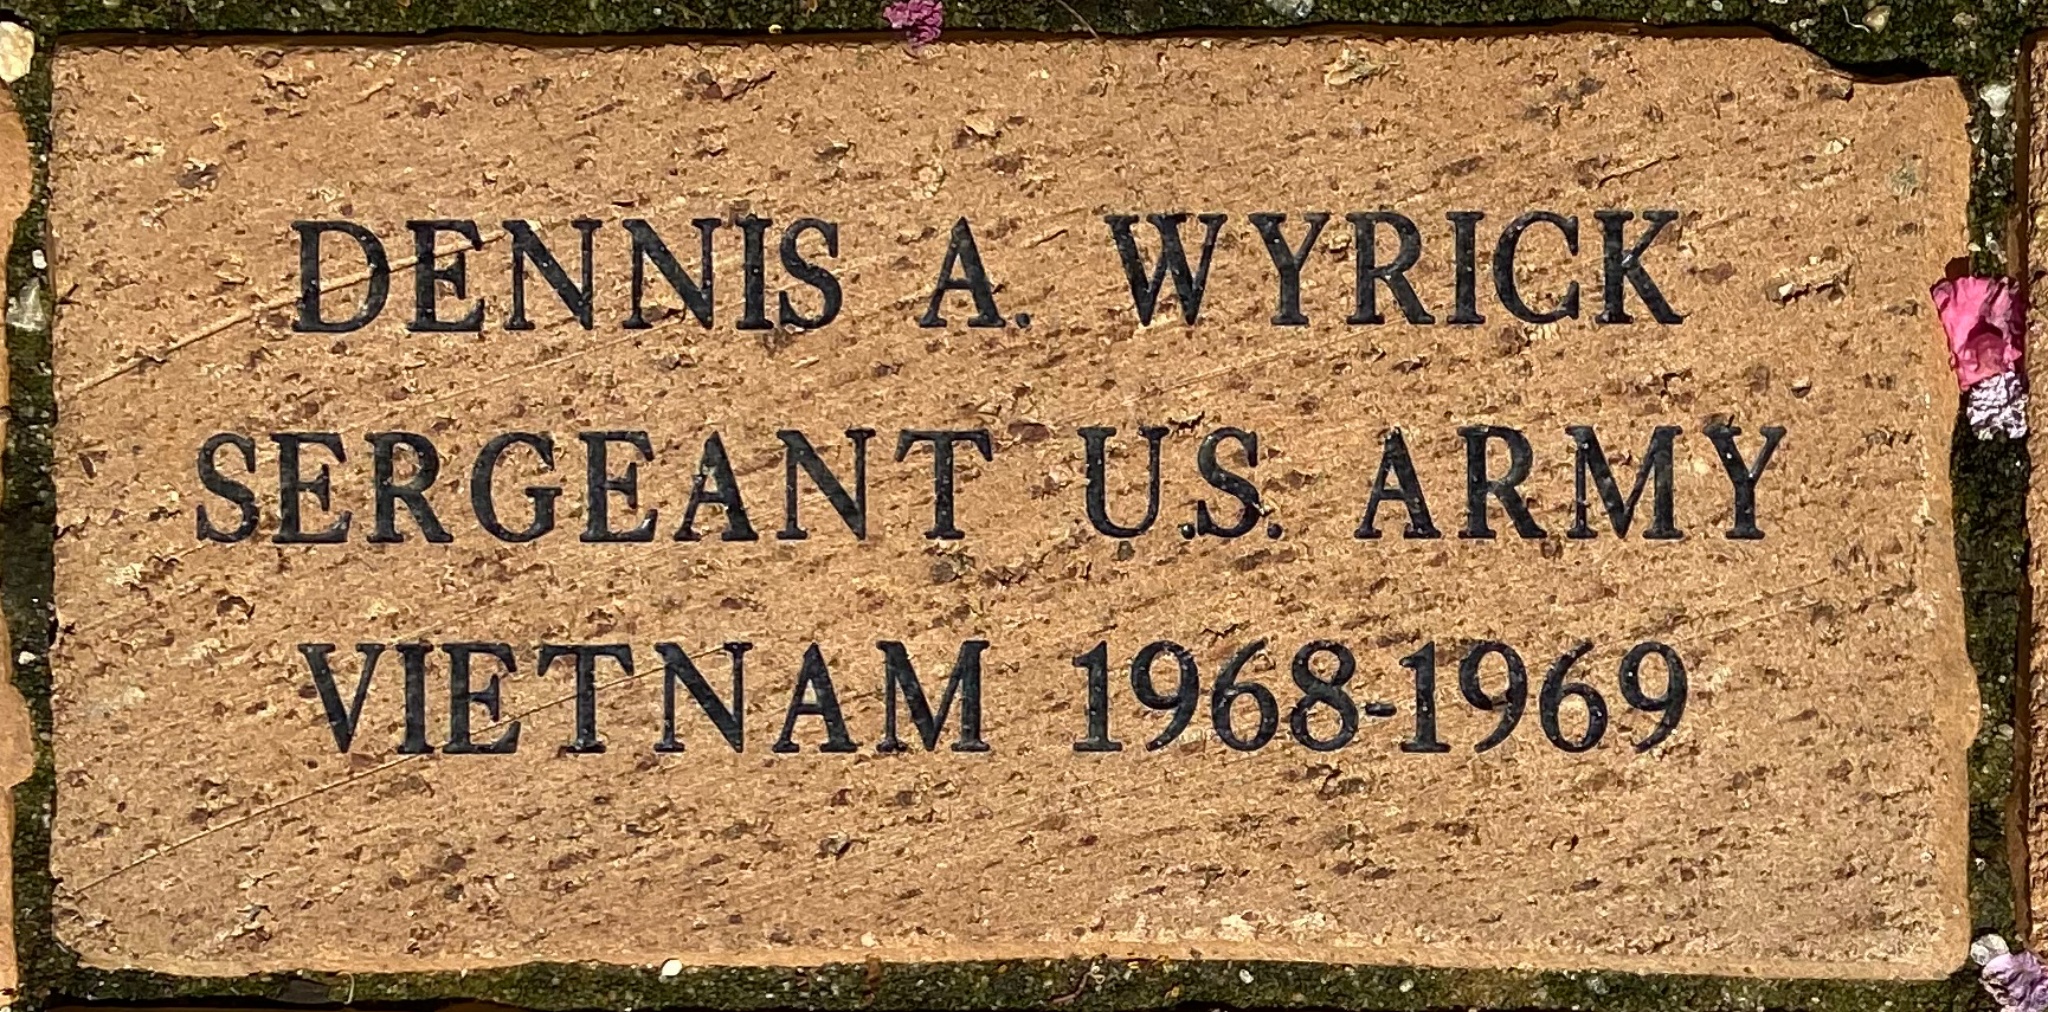 DENNIS A. WYRICK SERGEANT U.S. ARMY VIETNAM 1968-1969